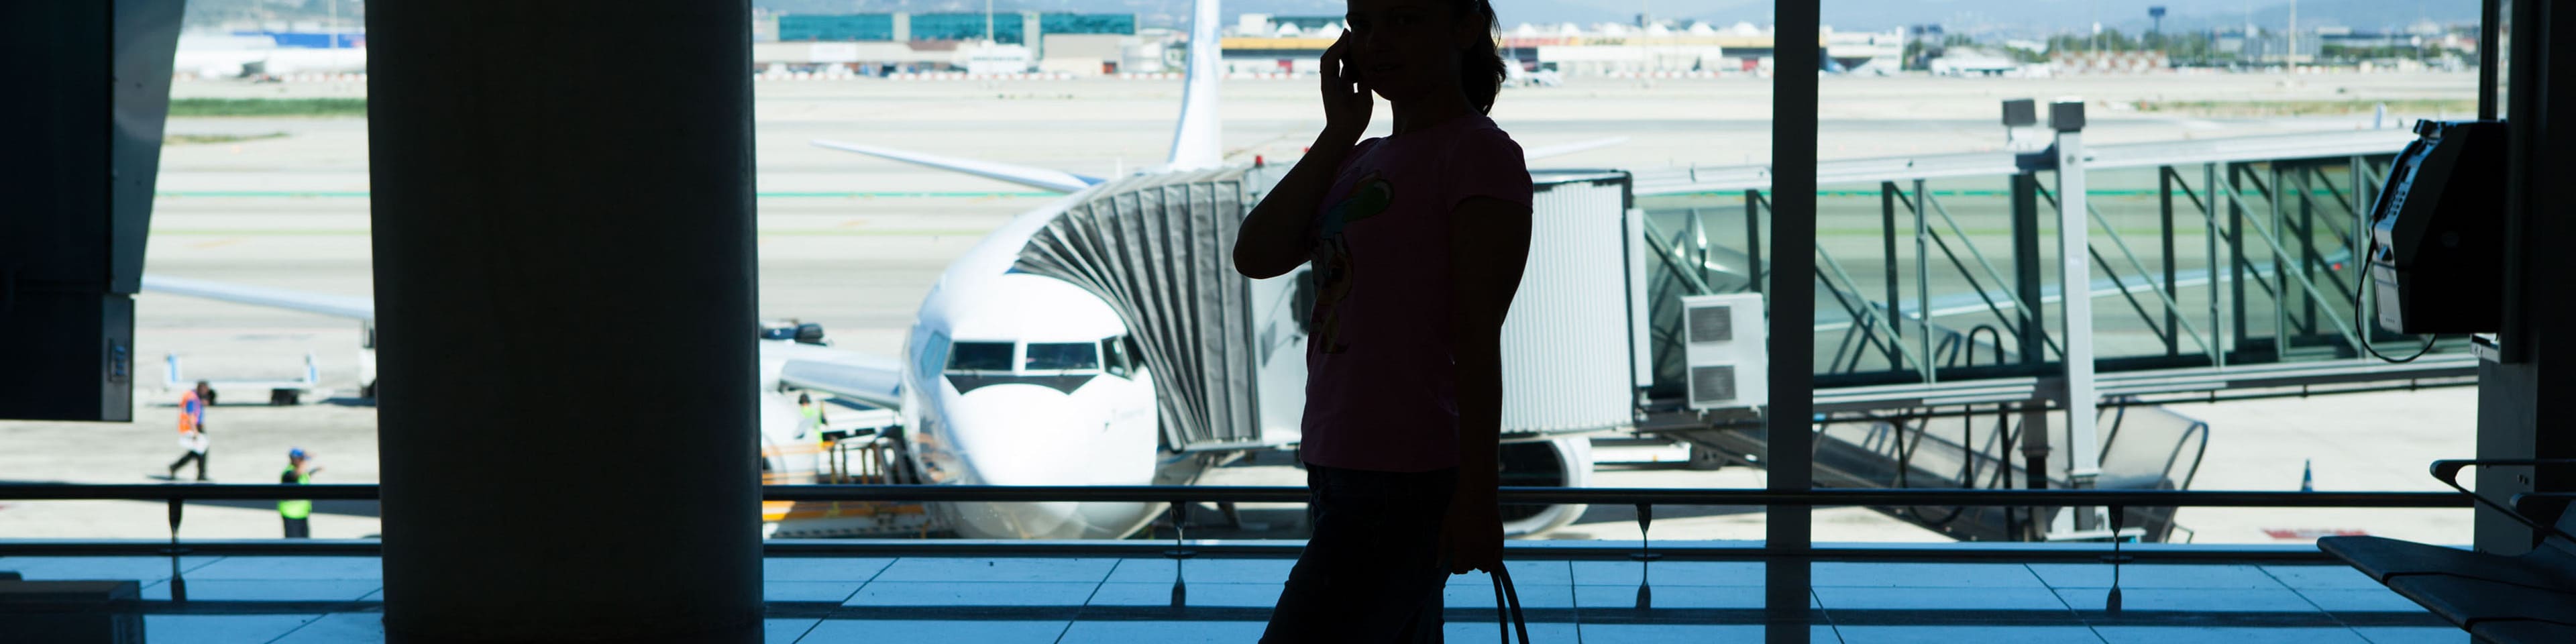 airport gate airplane terminal silhouette woman